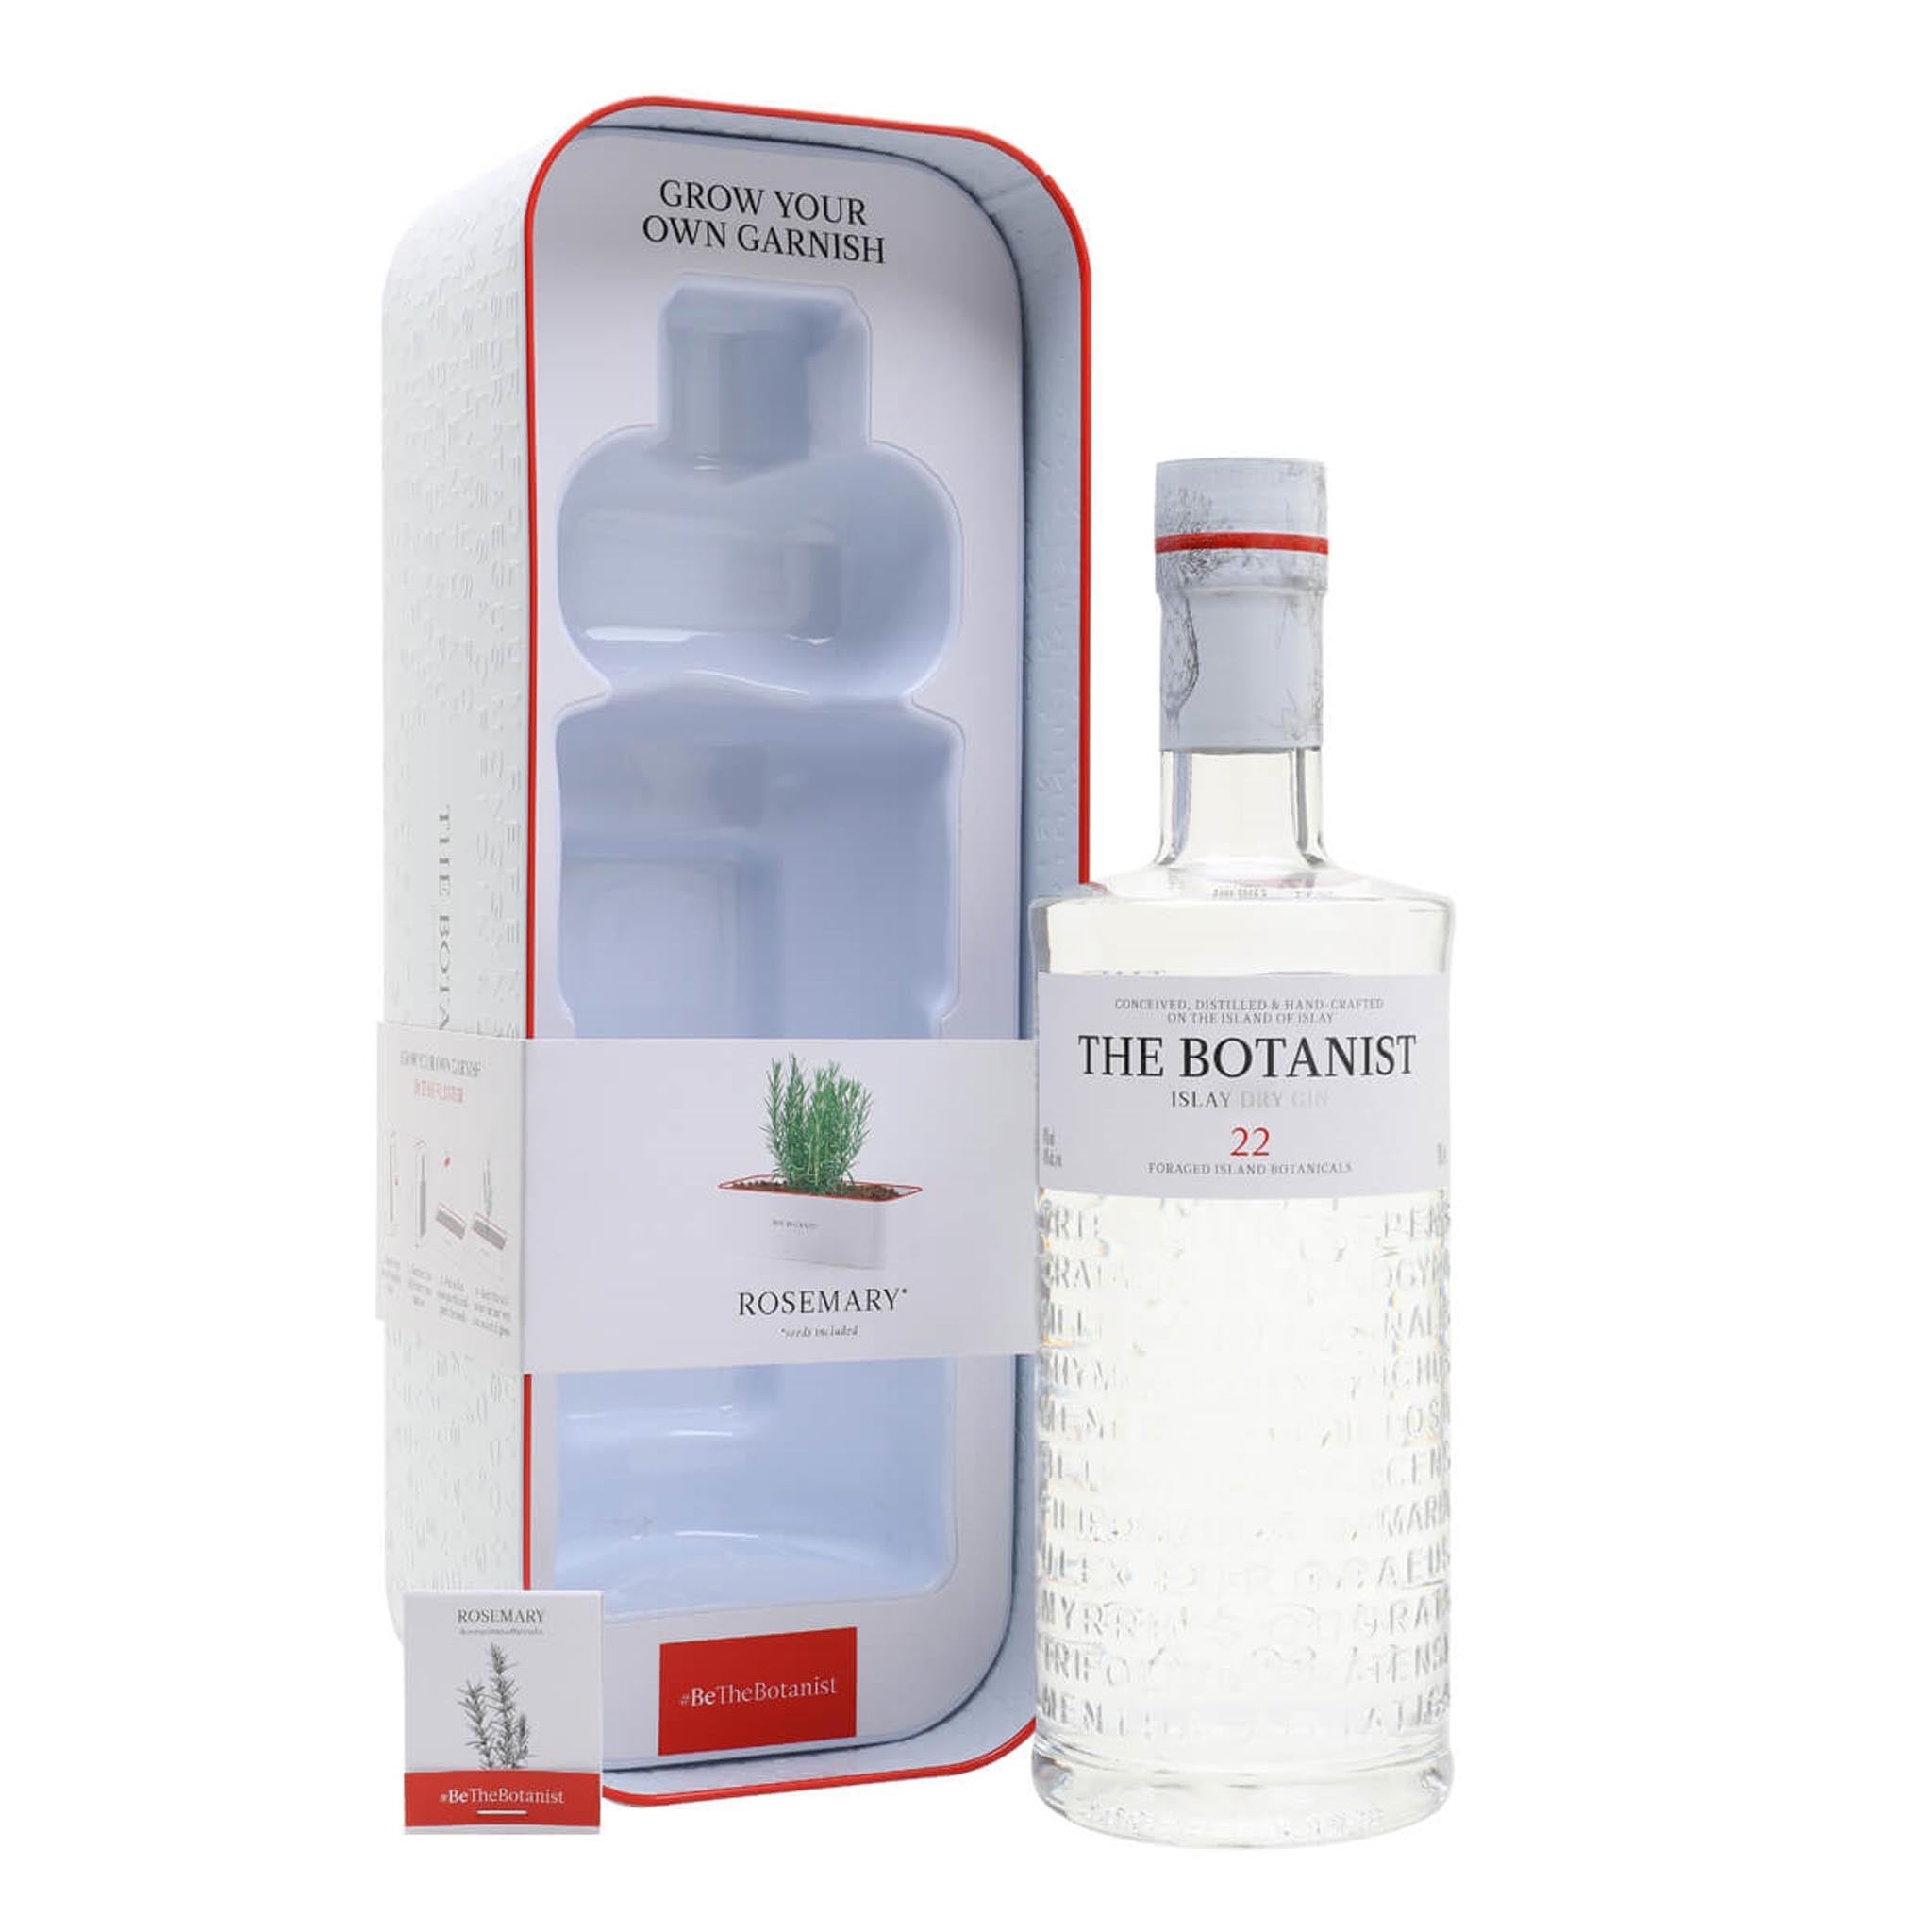 The Botanist Islay Dry Gin - 70cl